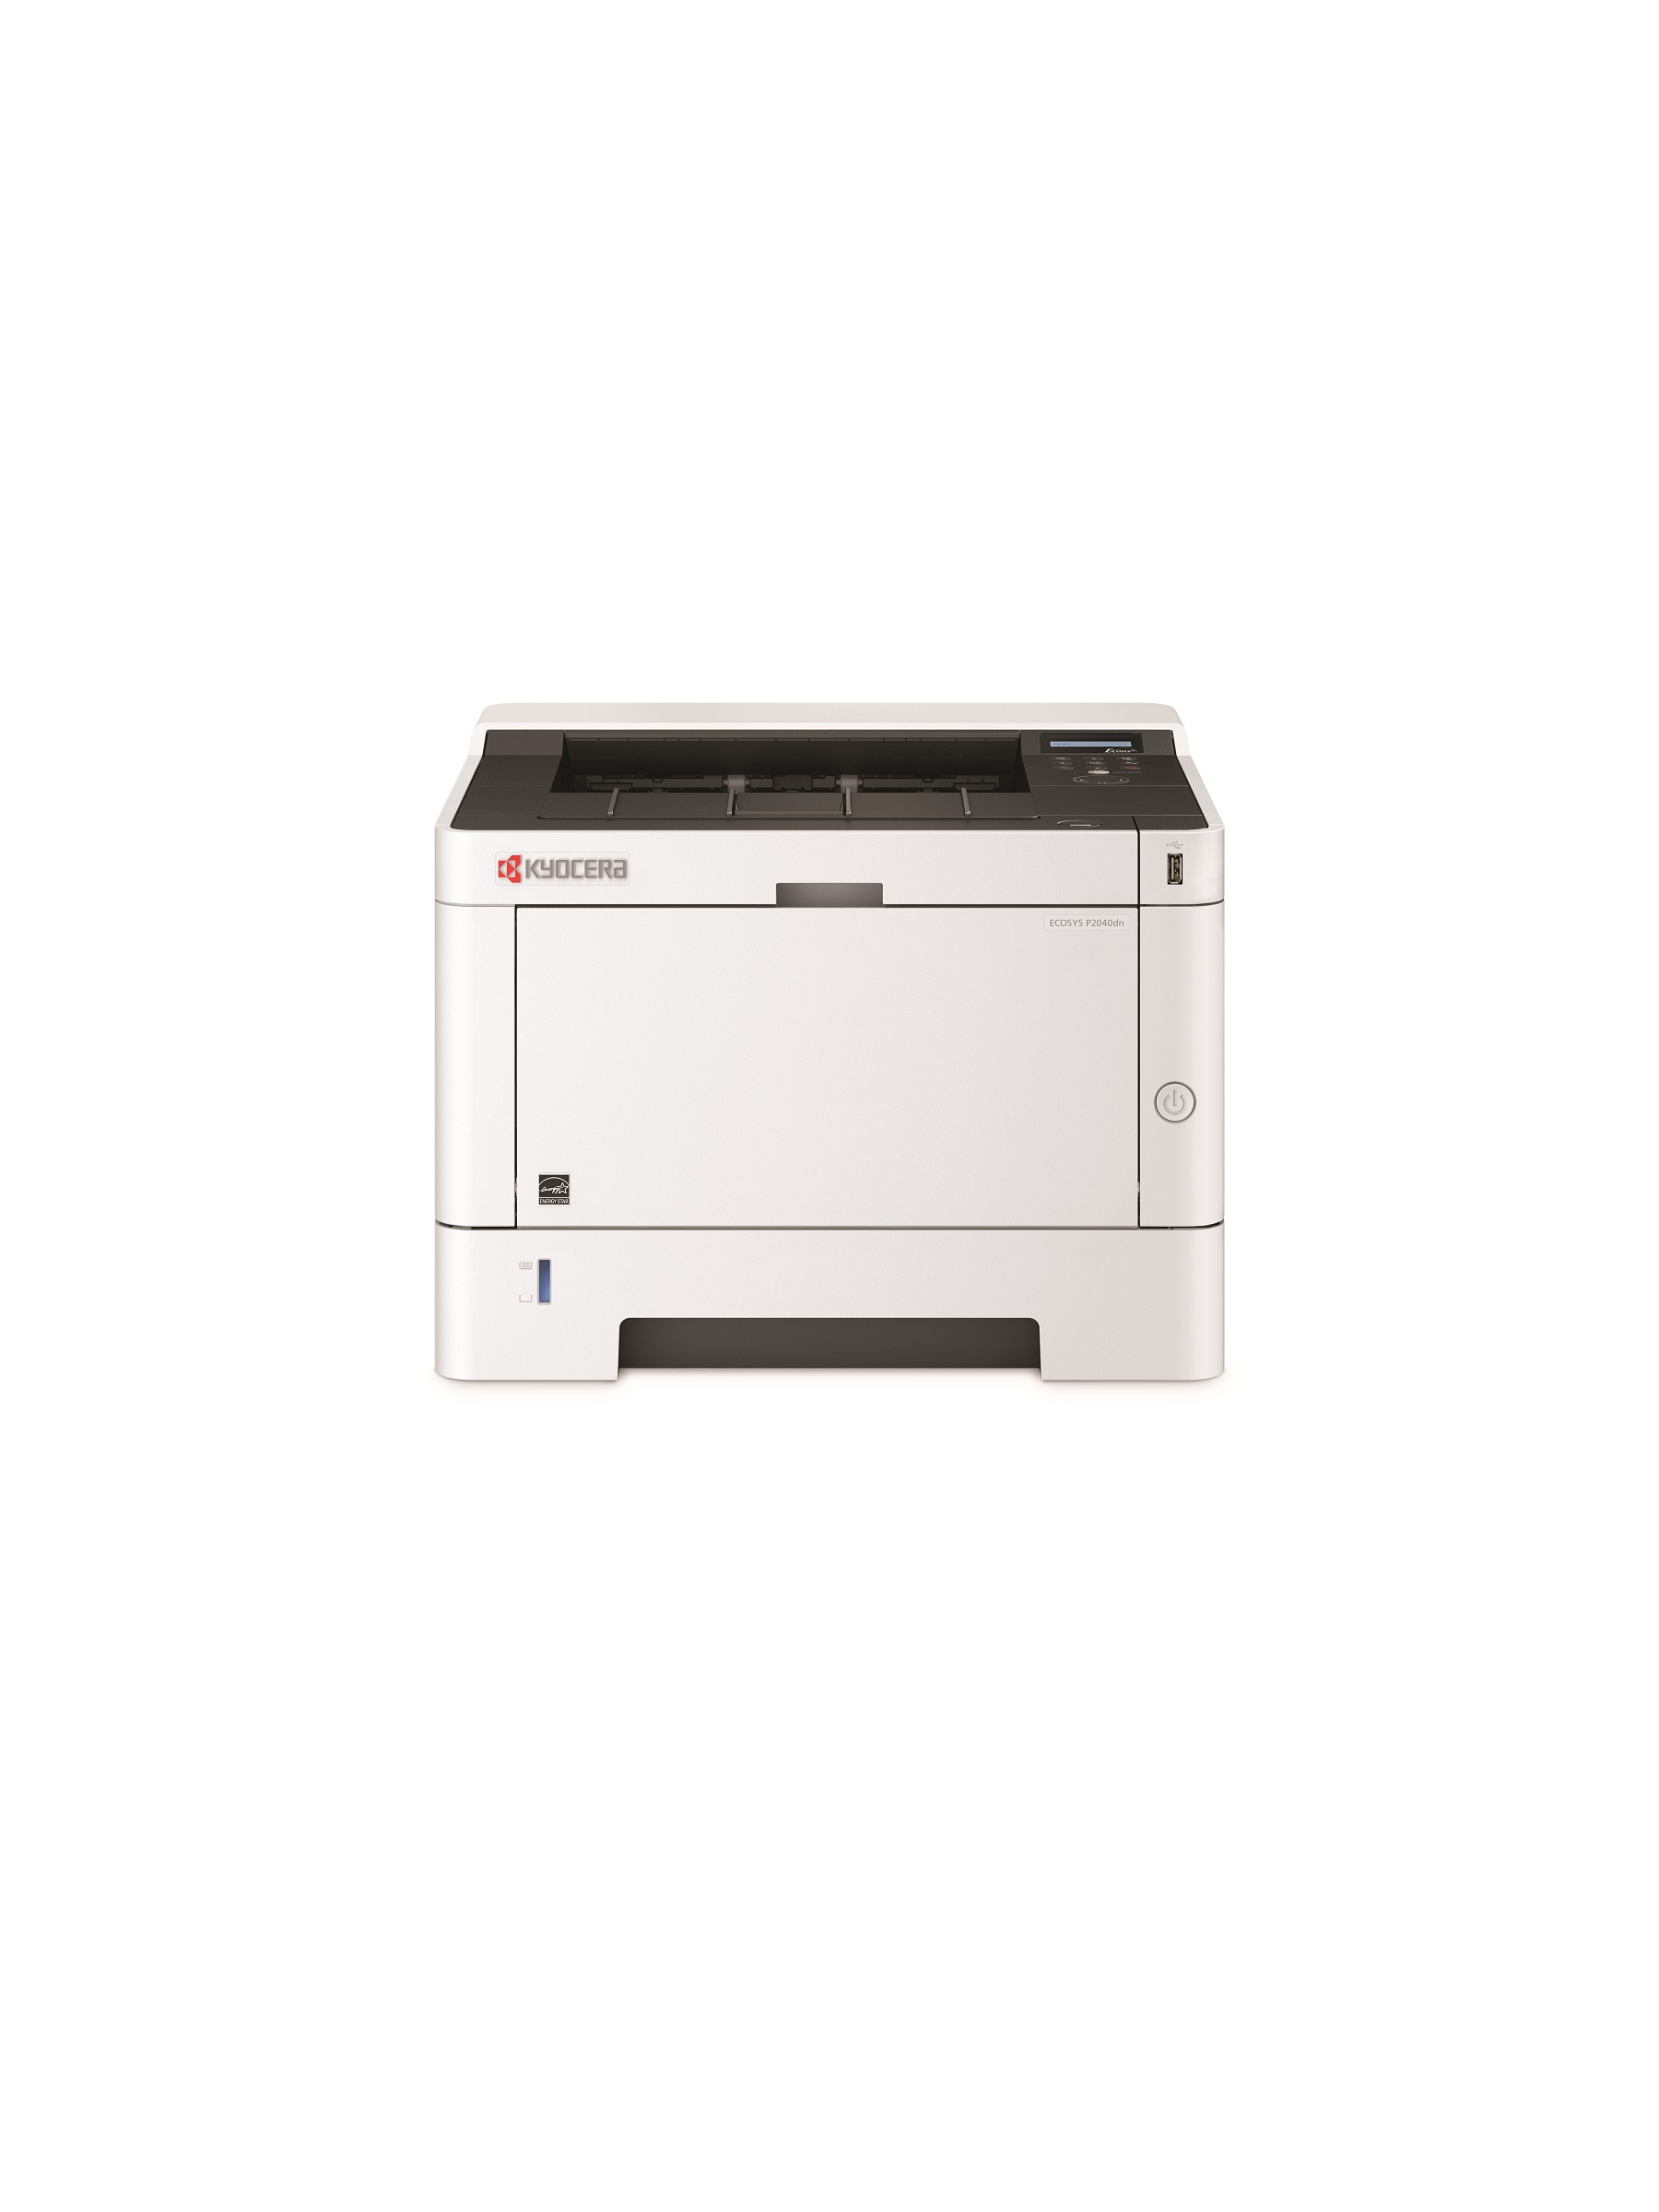 KYOCERA 870B61102RY3NL2 laser printer